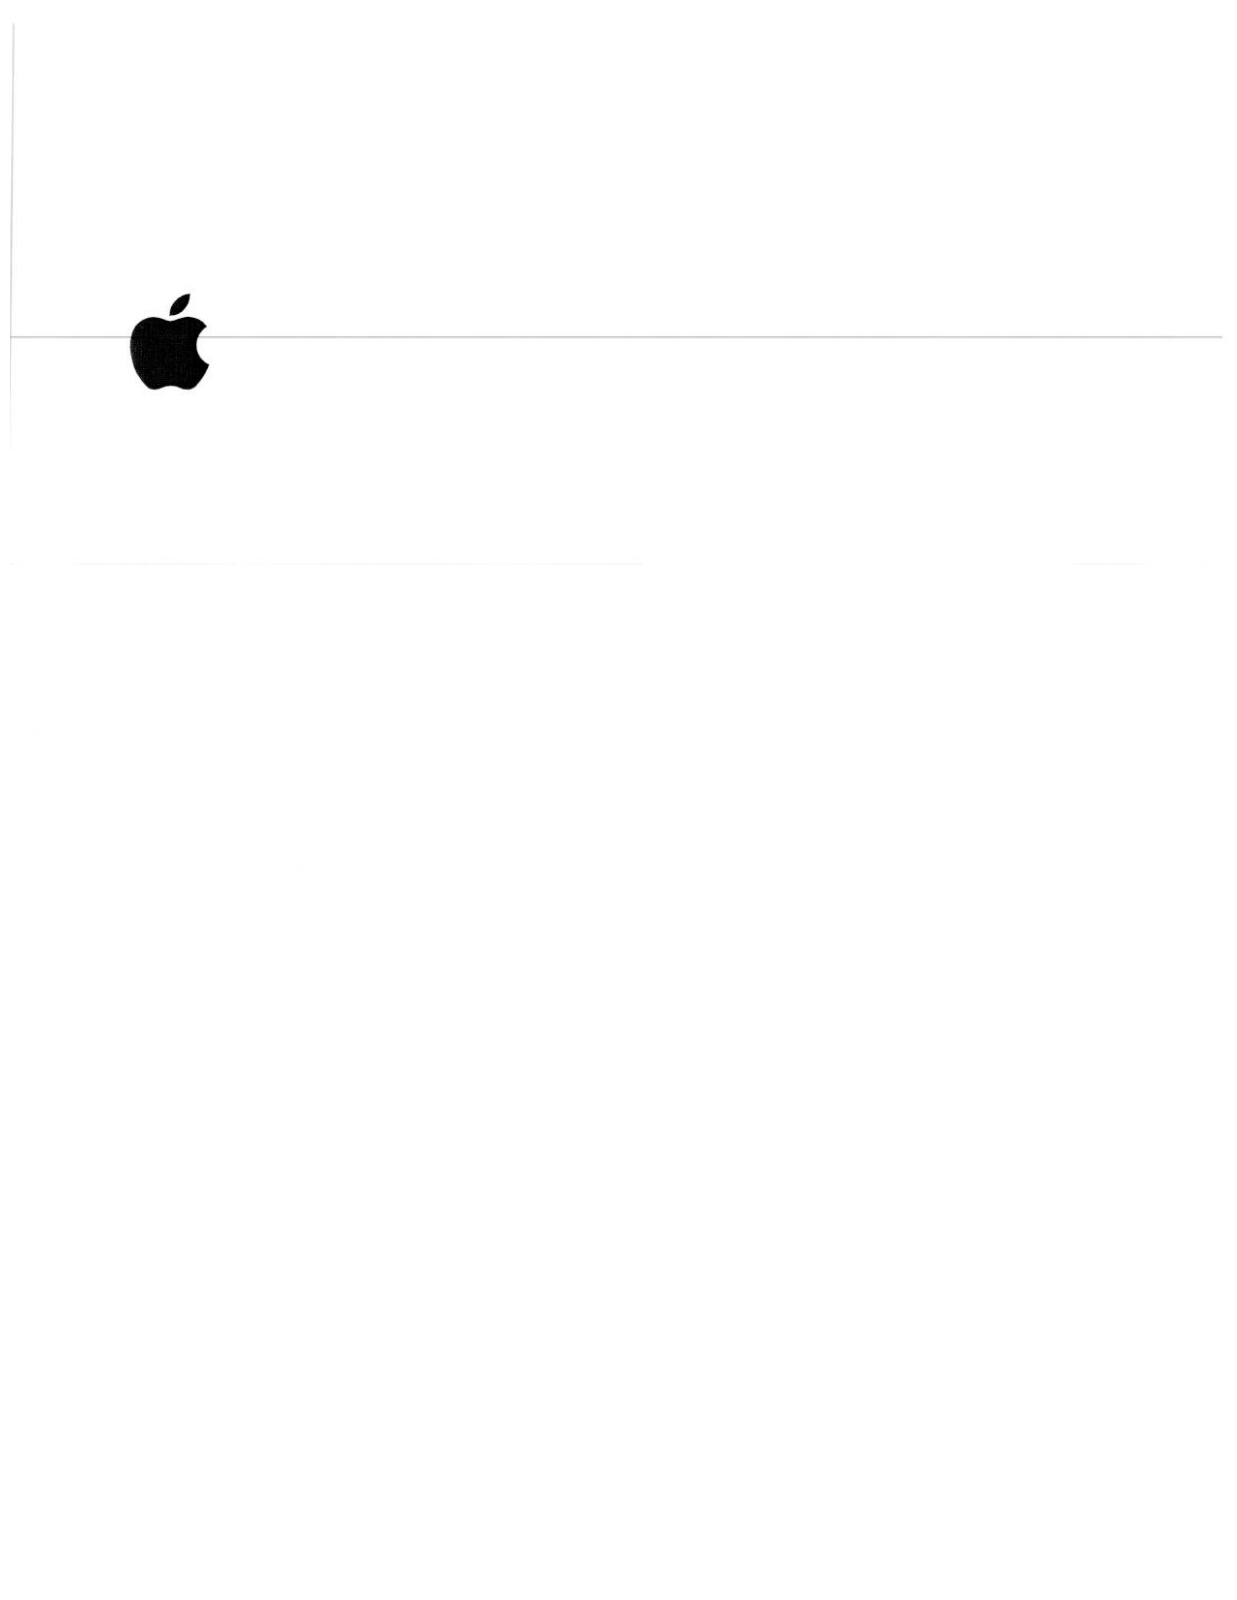 Apple A1314 User Manual